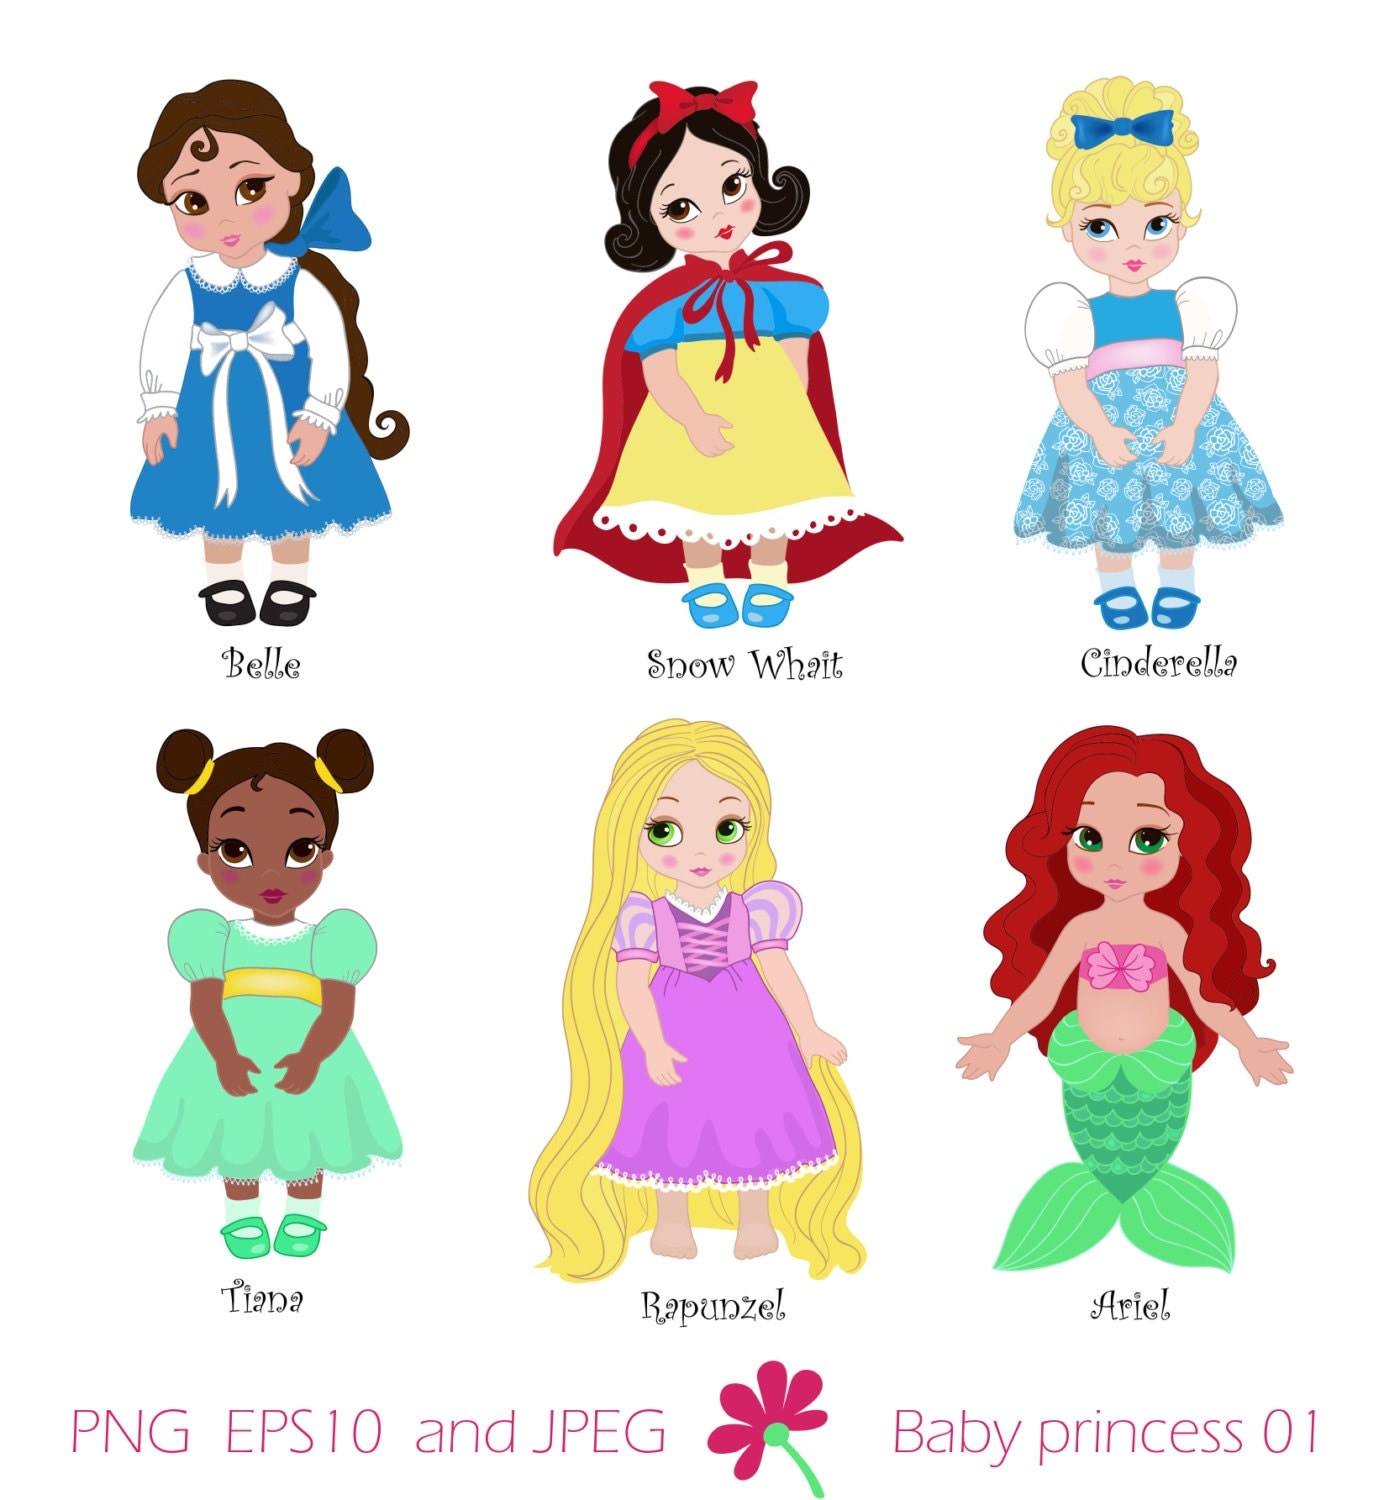 Baby princess Disney vectorizada - Imagui